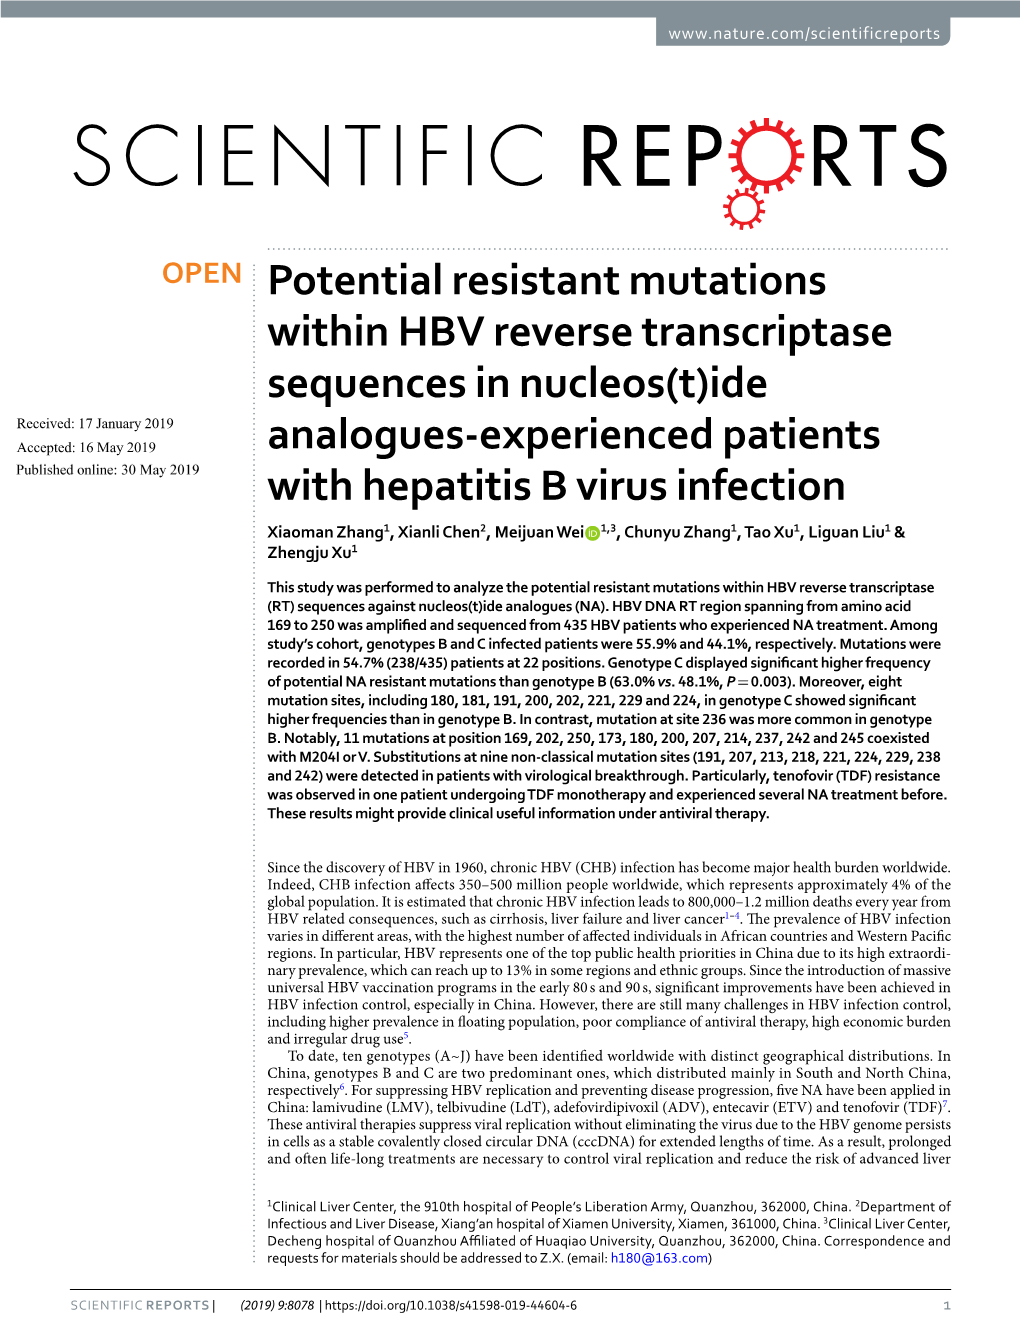 Potential Resistant Mutations Within HBV Reverse Transcriptase